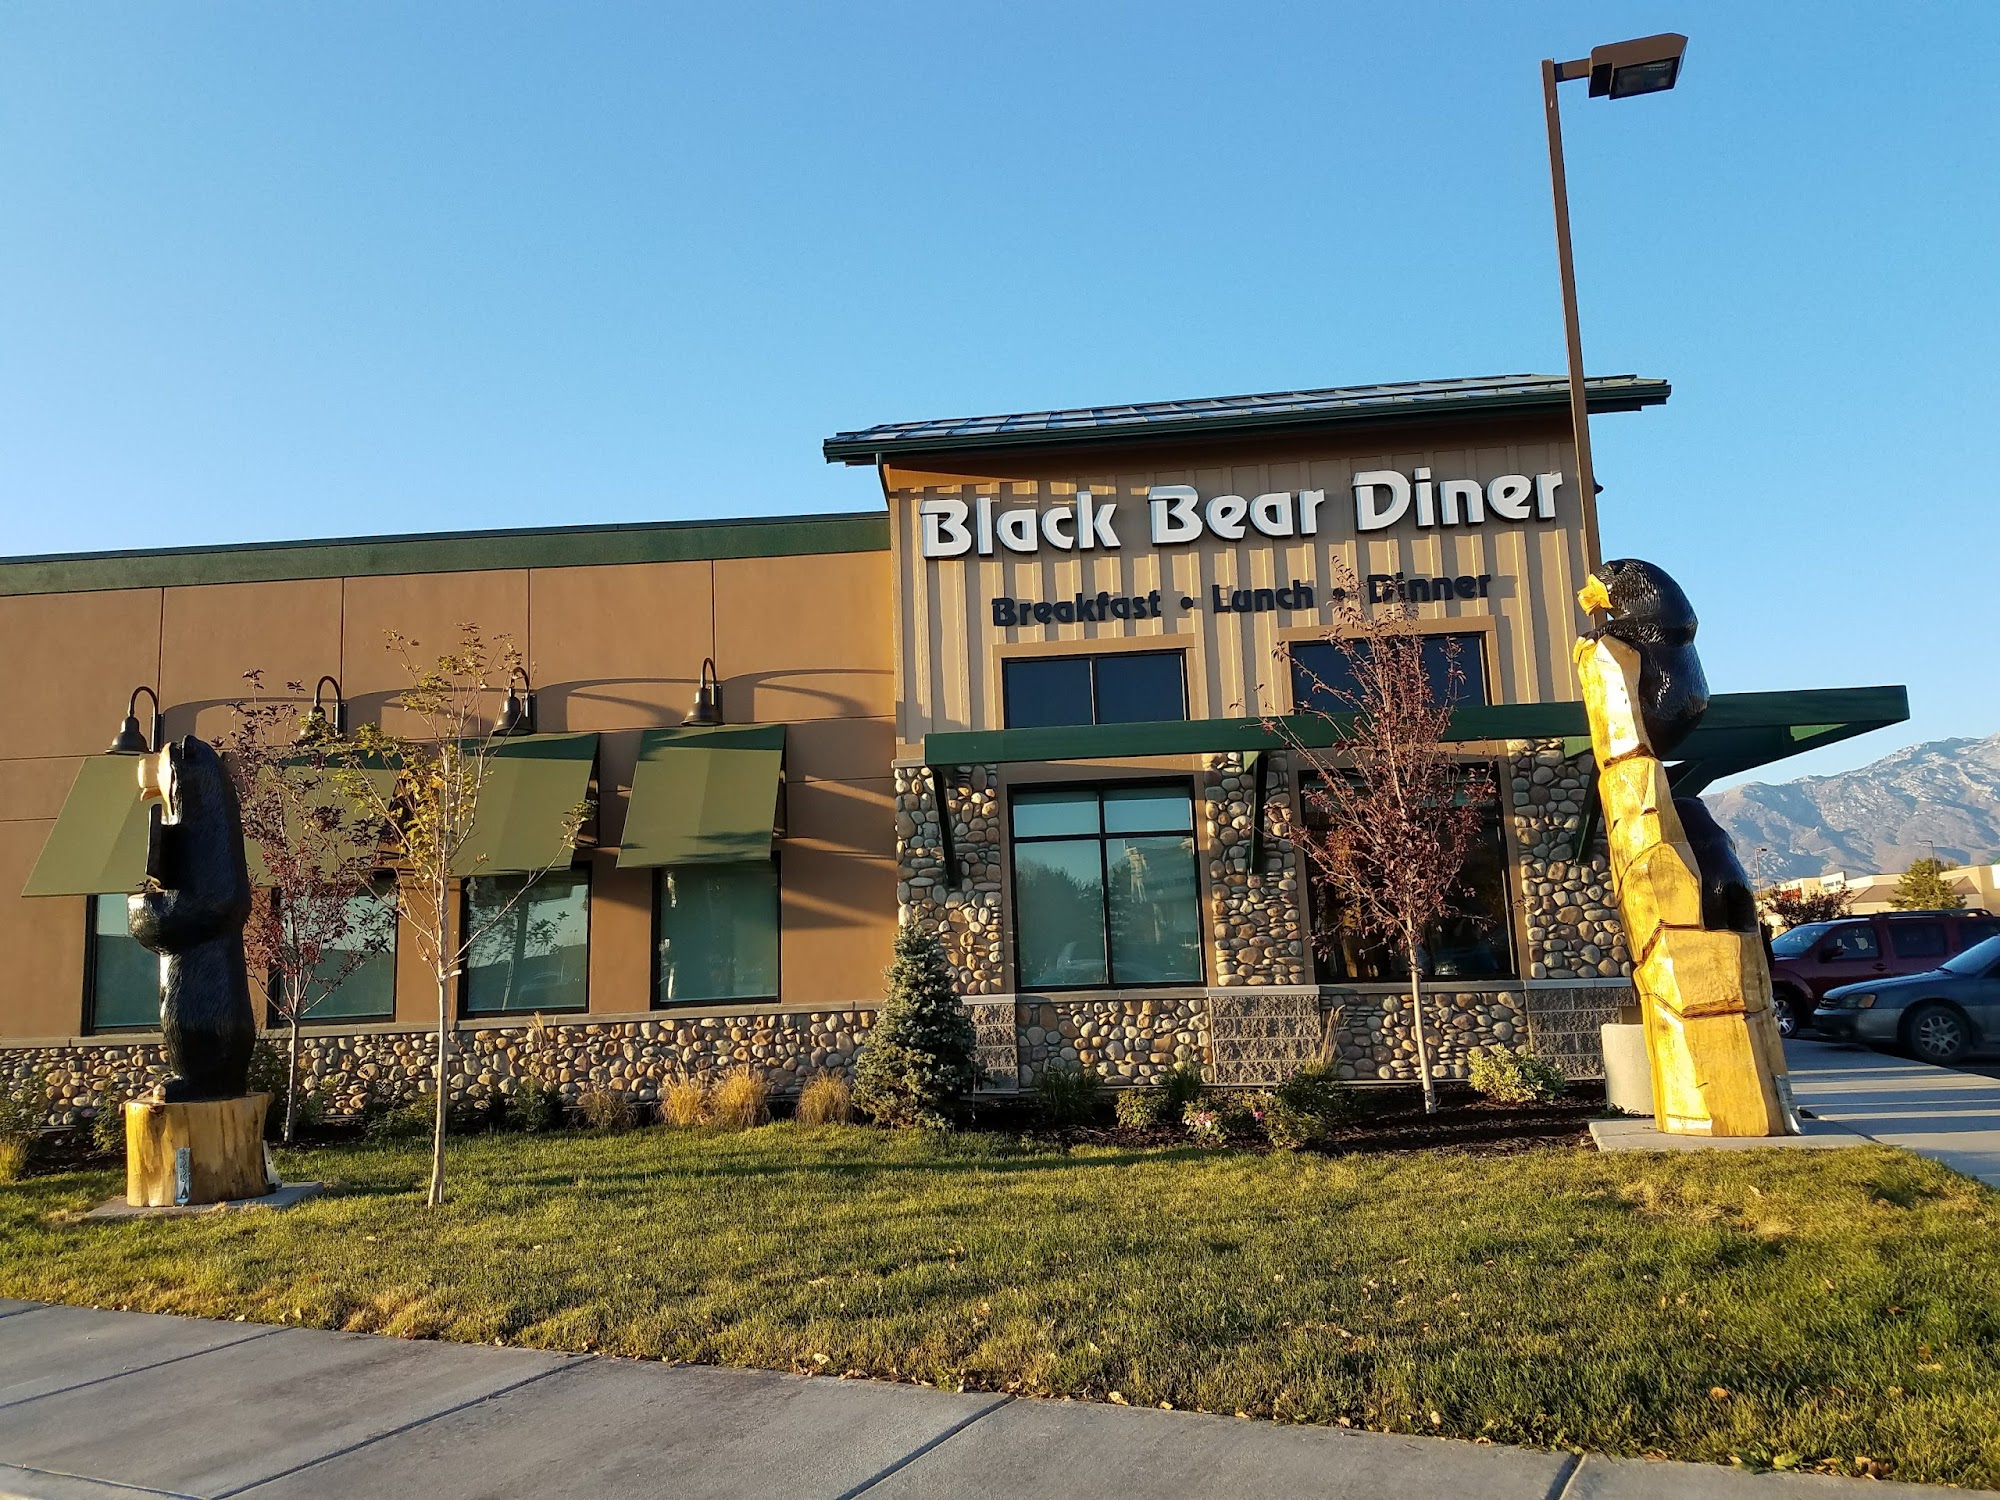 Black Bear Diner American Fork